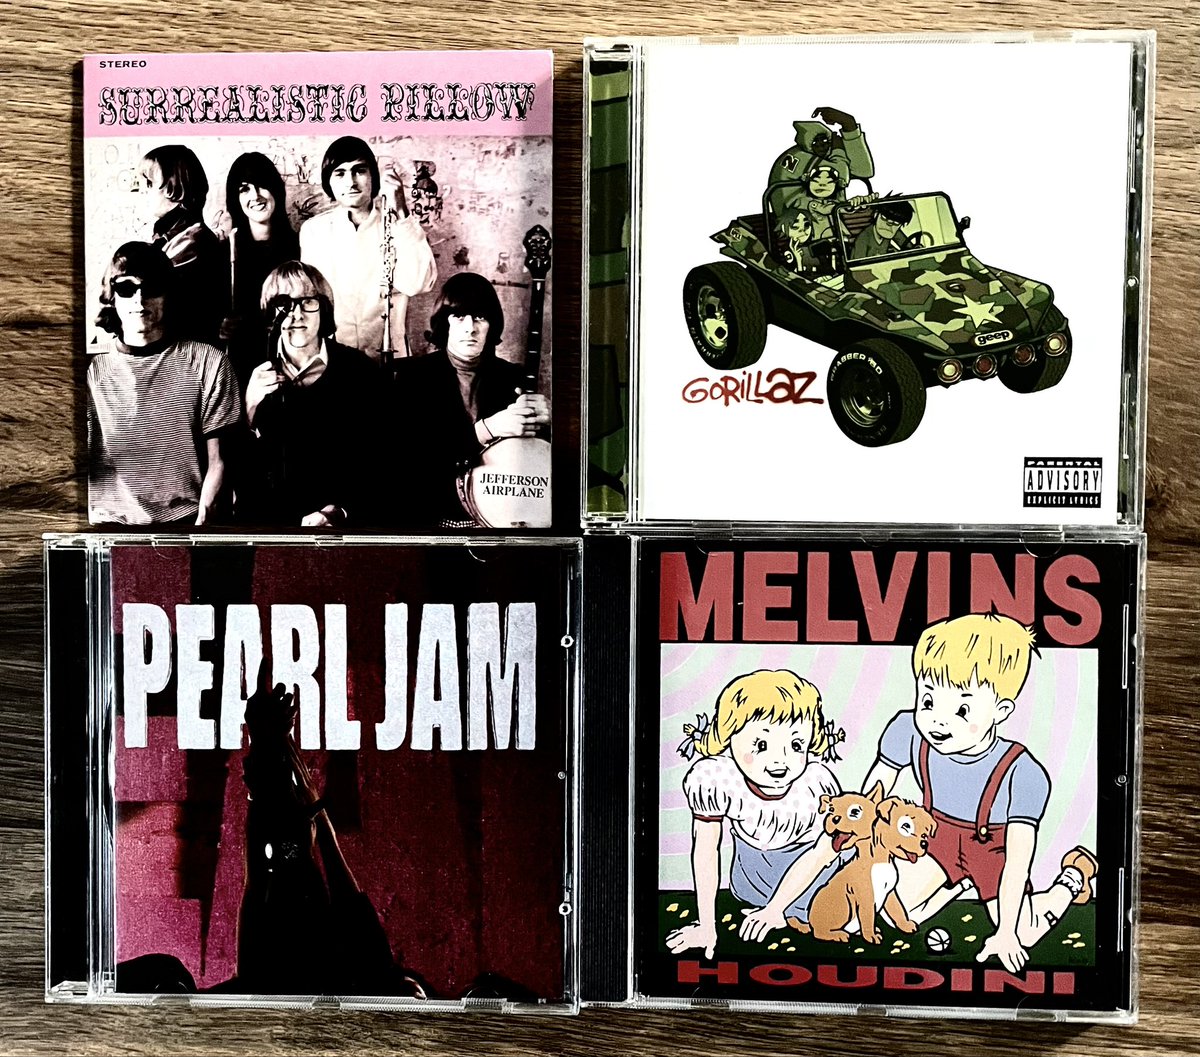 Sunday 28/4/24
#JeffersonAirplane #Gorillaz #PearlJam #Melvins